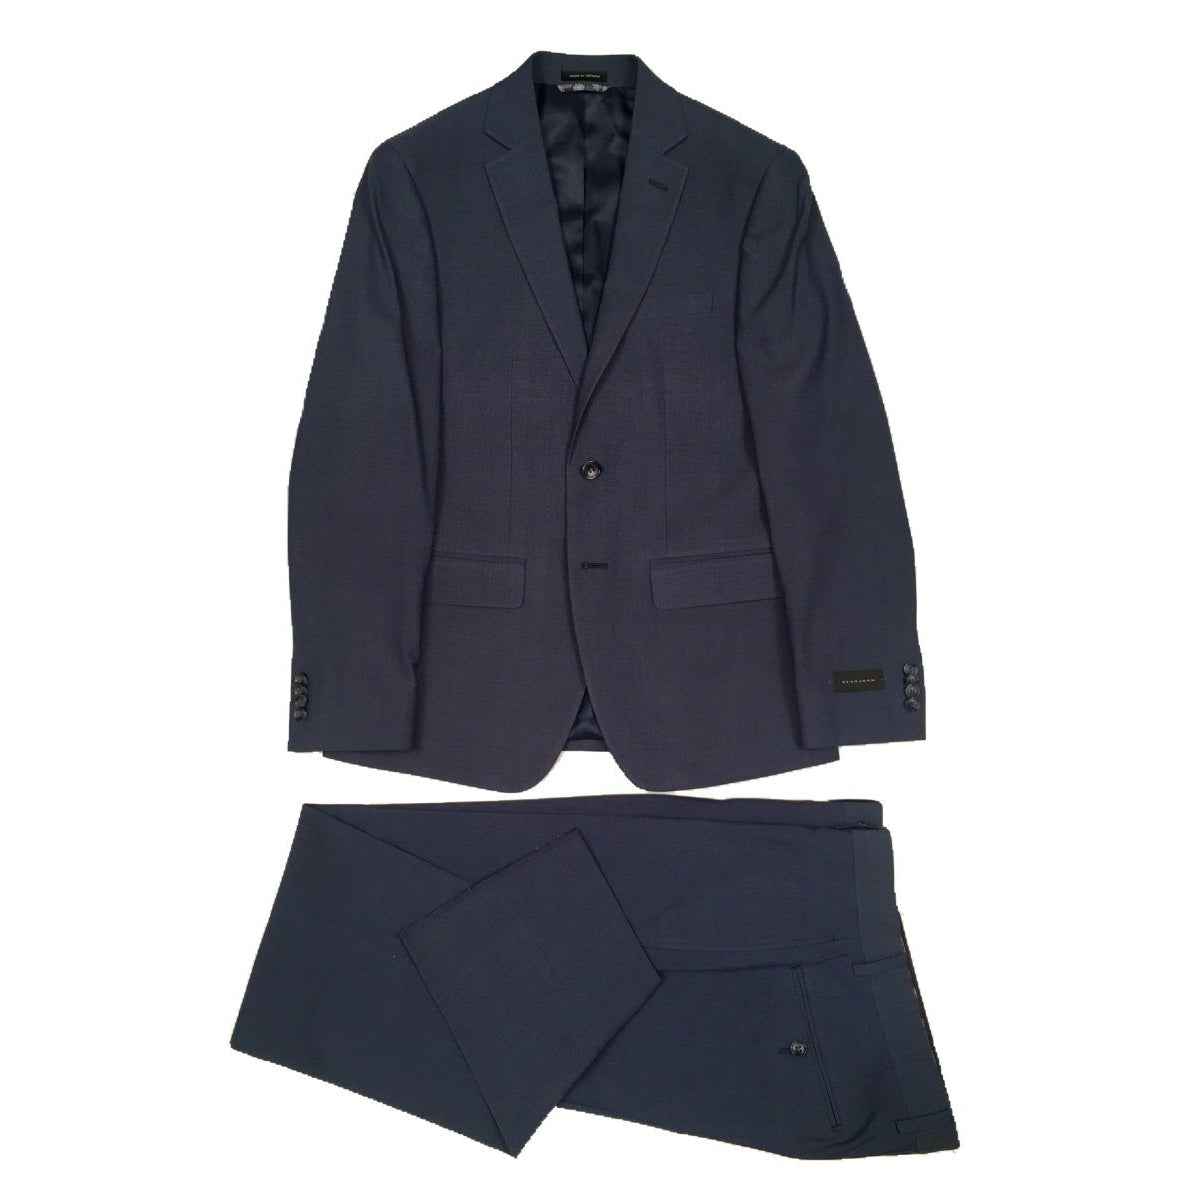 Sean John Mens Blue Suit Z1541 Suits (Men) Sean John 